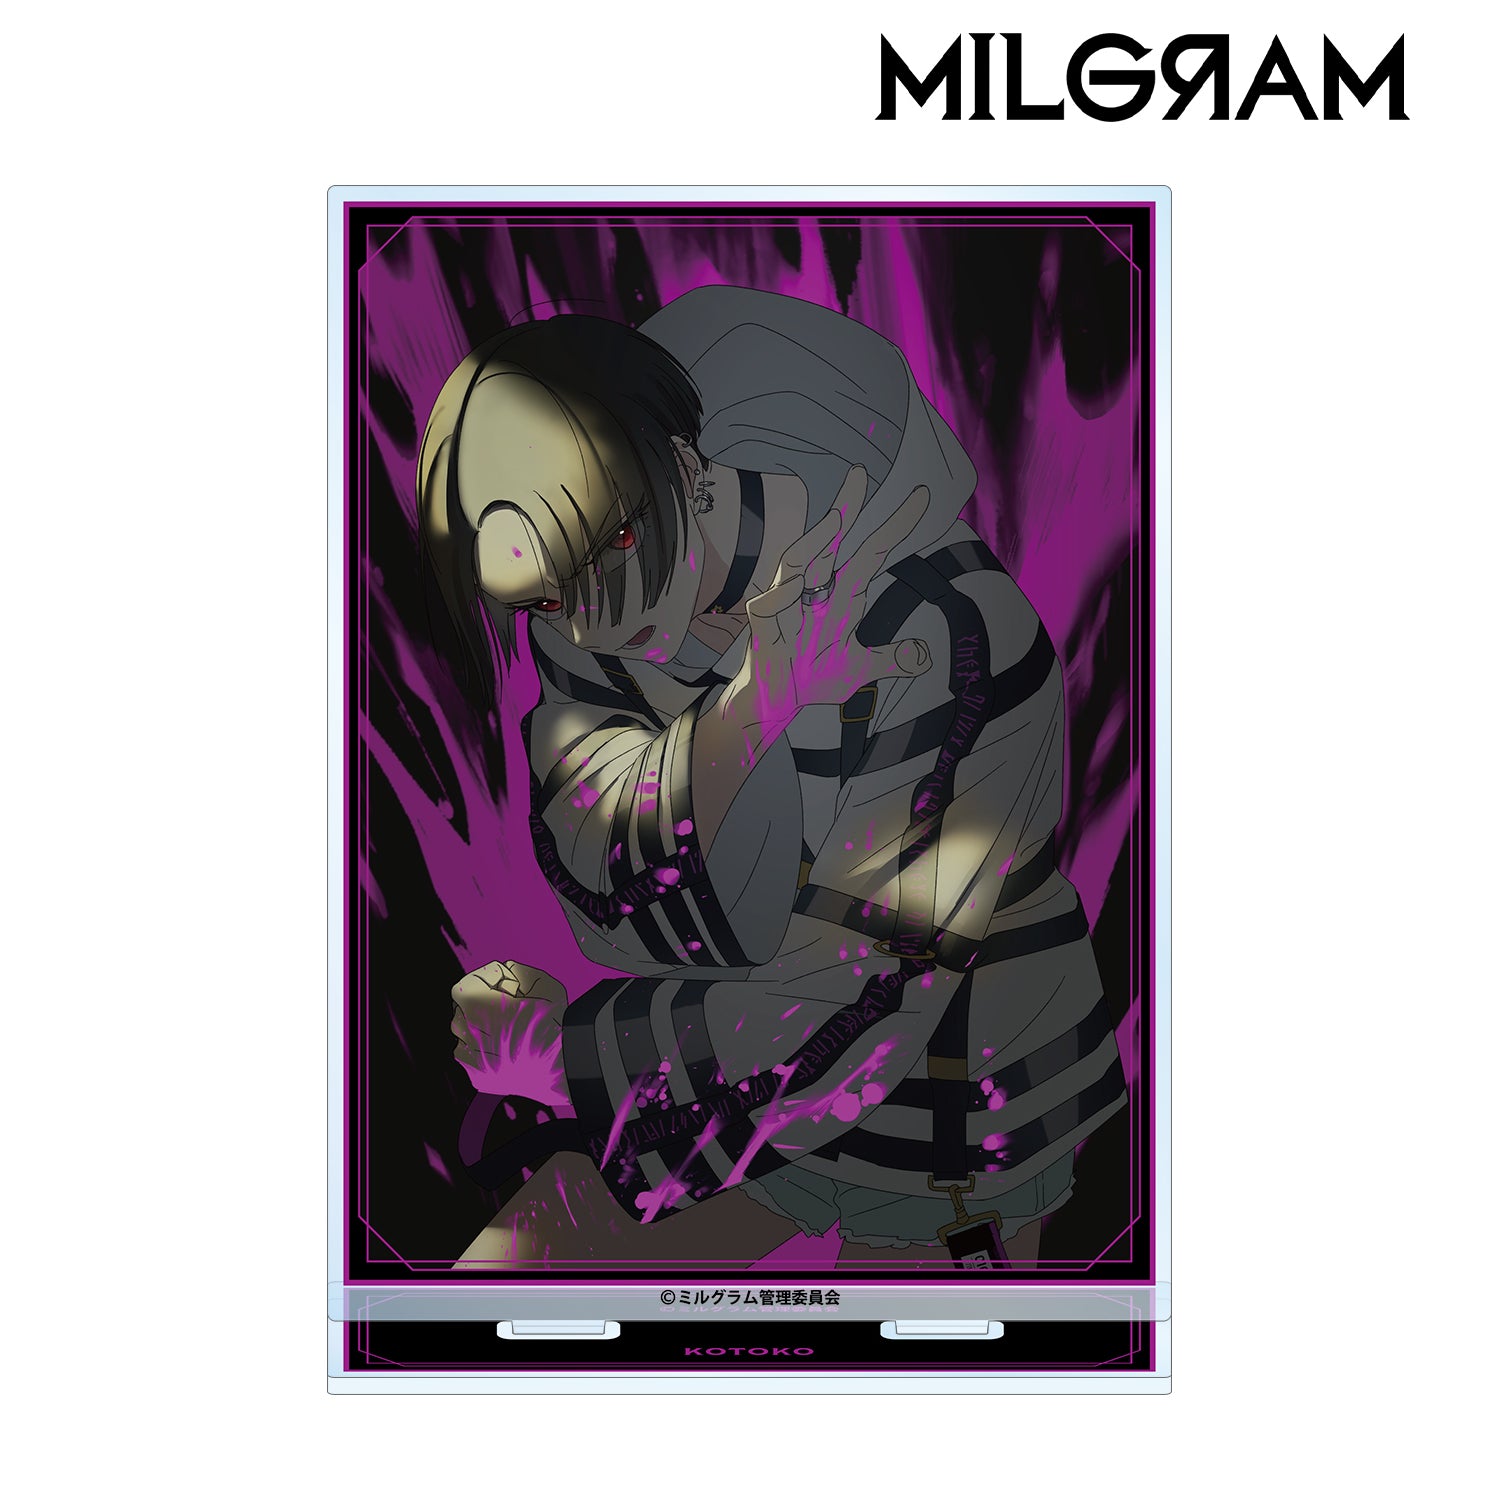 『MILGRAM -ミルグラム-』描き下ろしイラスト コトコ 2nd Anniversary ver. BIGアクリルスタンド